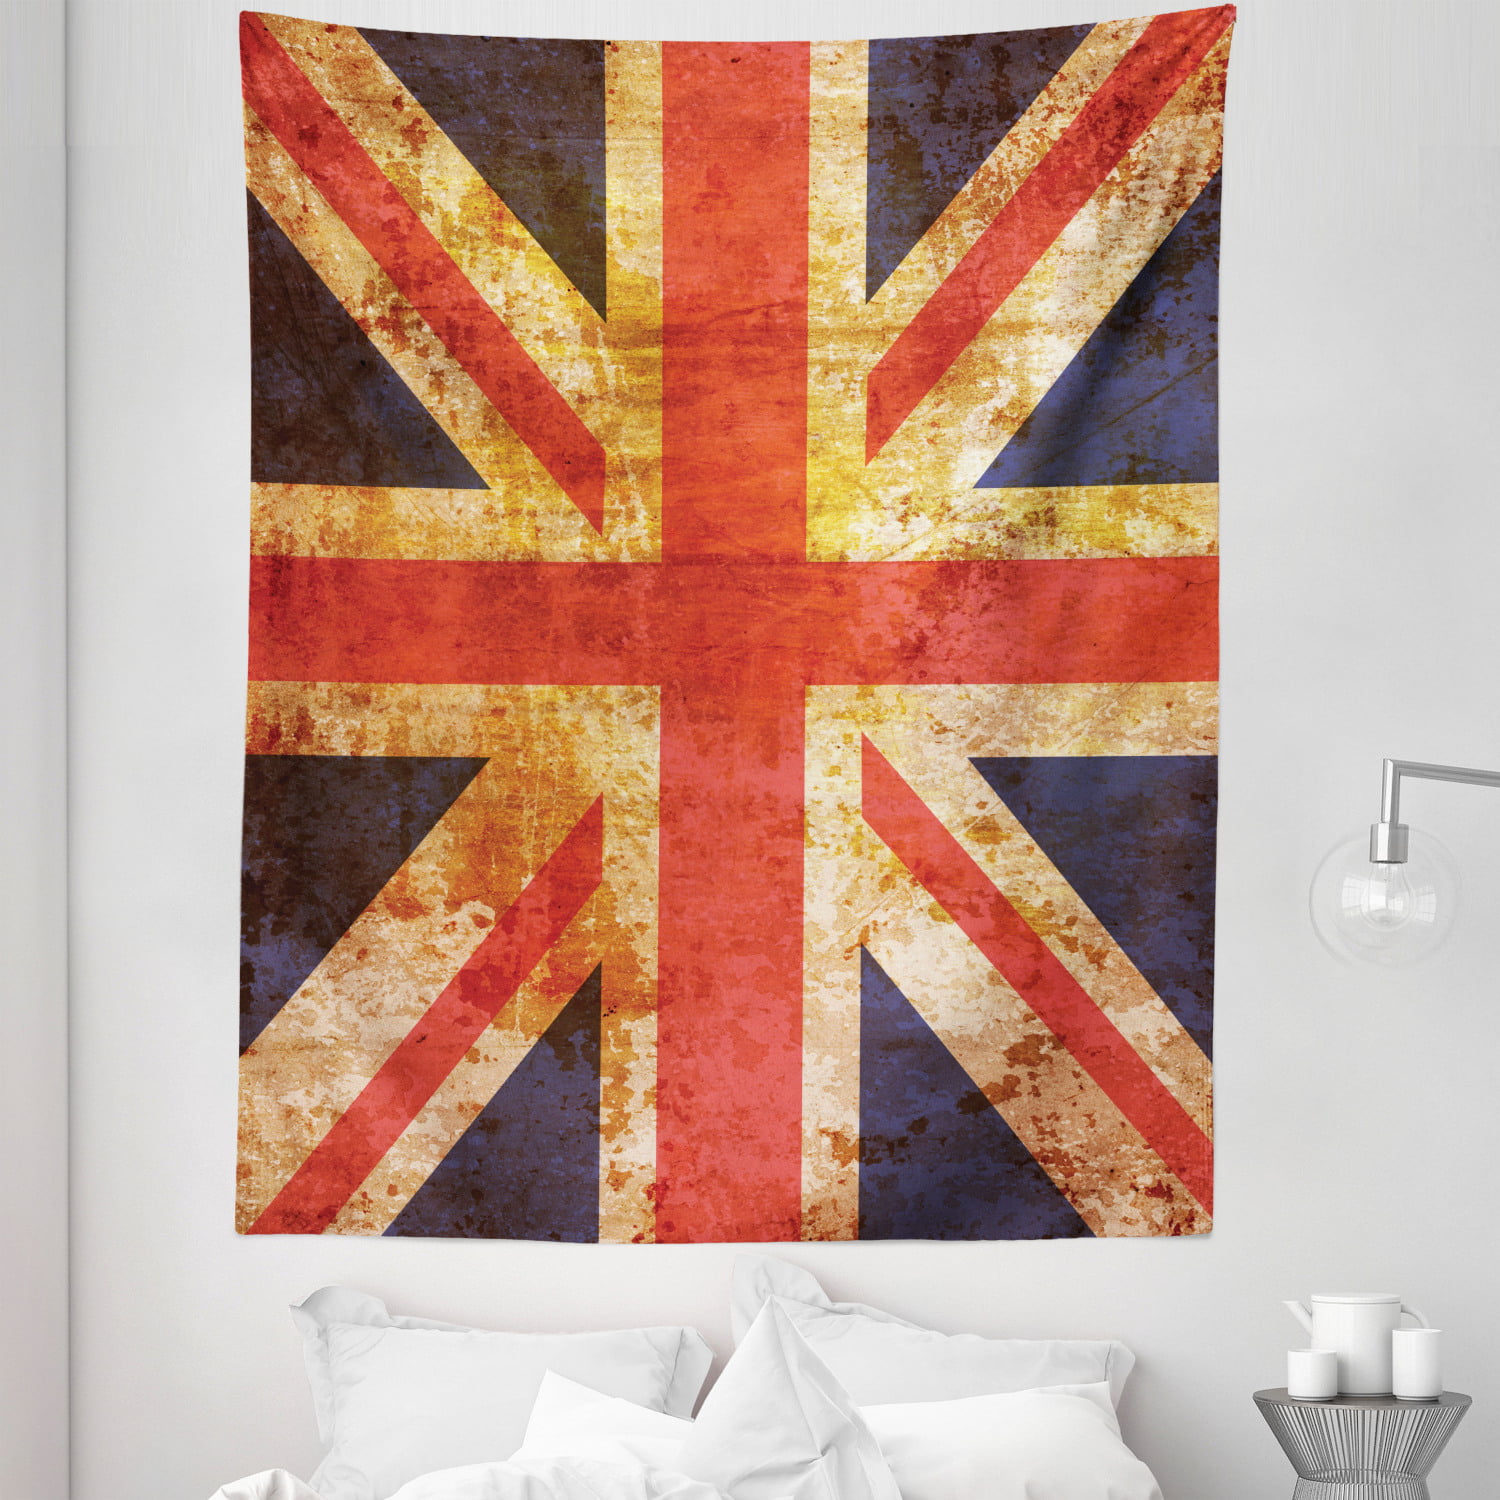 Brand New Child-Sized `UNION JACK` British Flag Tapestry Throw Blanket Fringed 